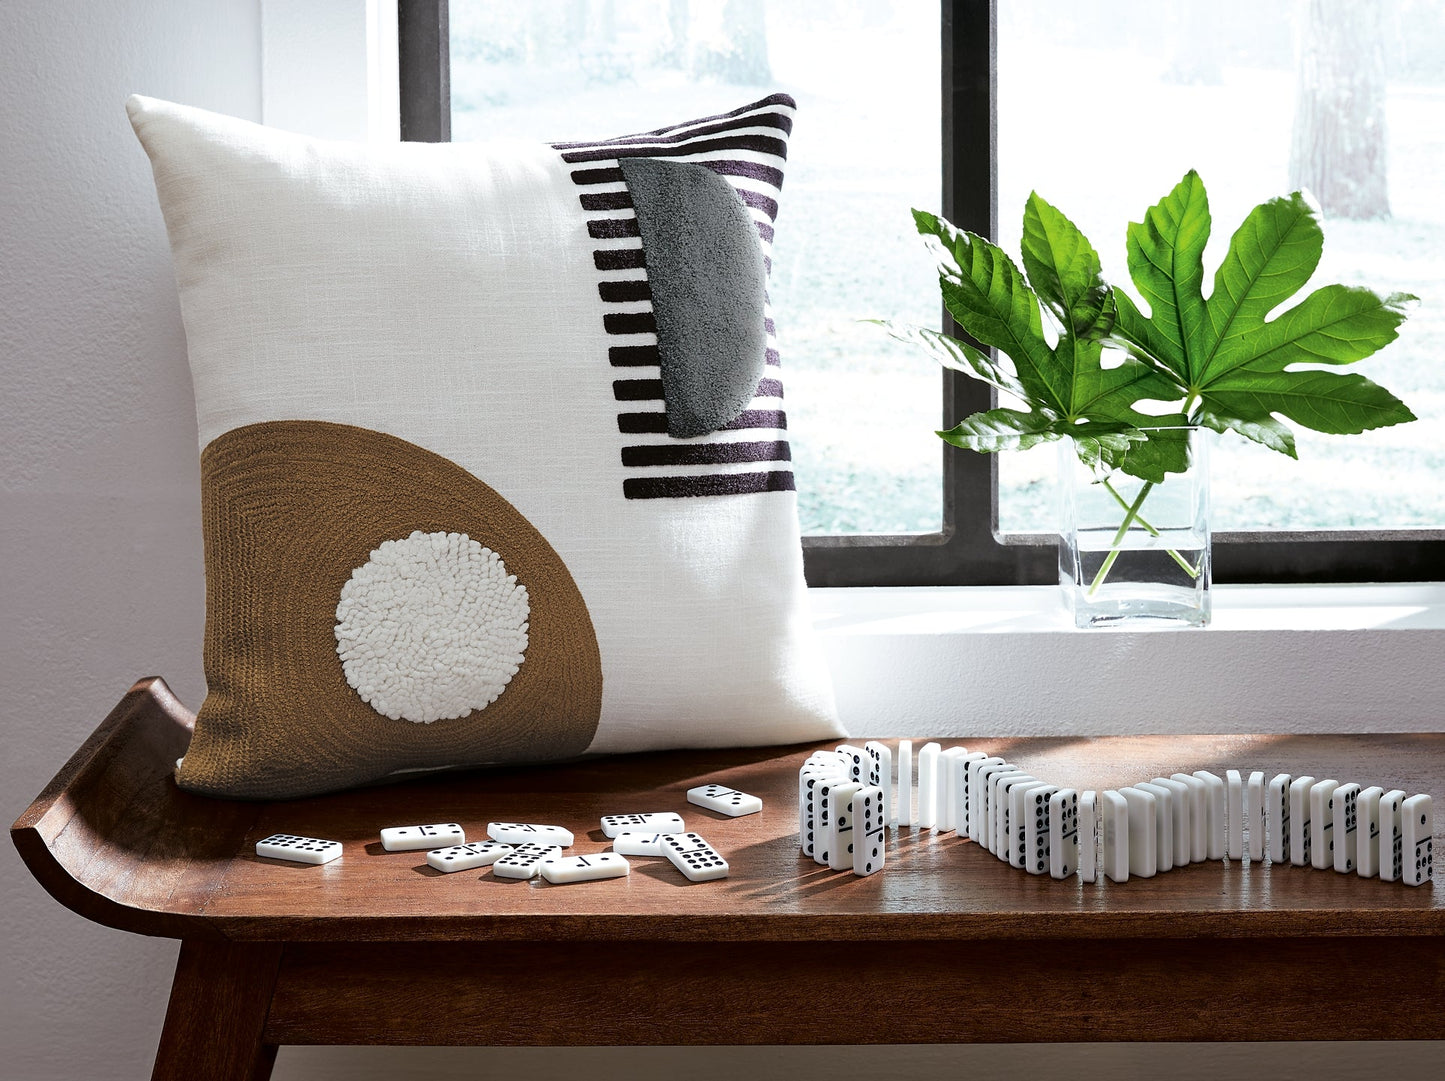 Longsum Pillow at Cloud 9 Mattress & Furniture furniture, home furnishing, home decor